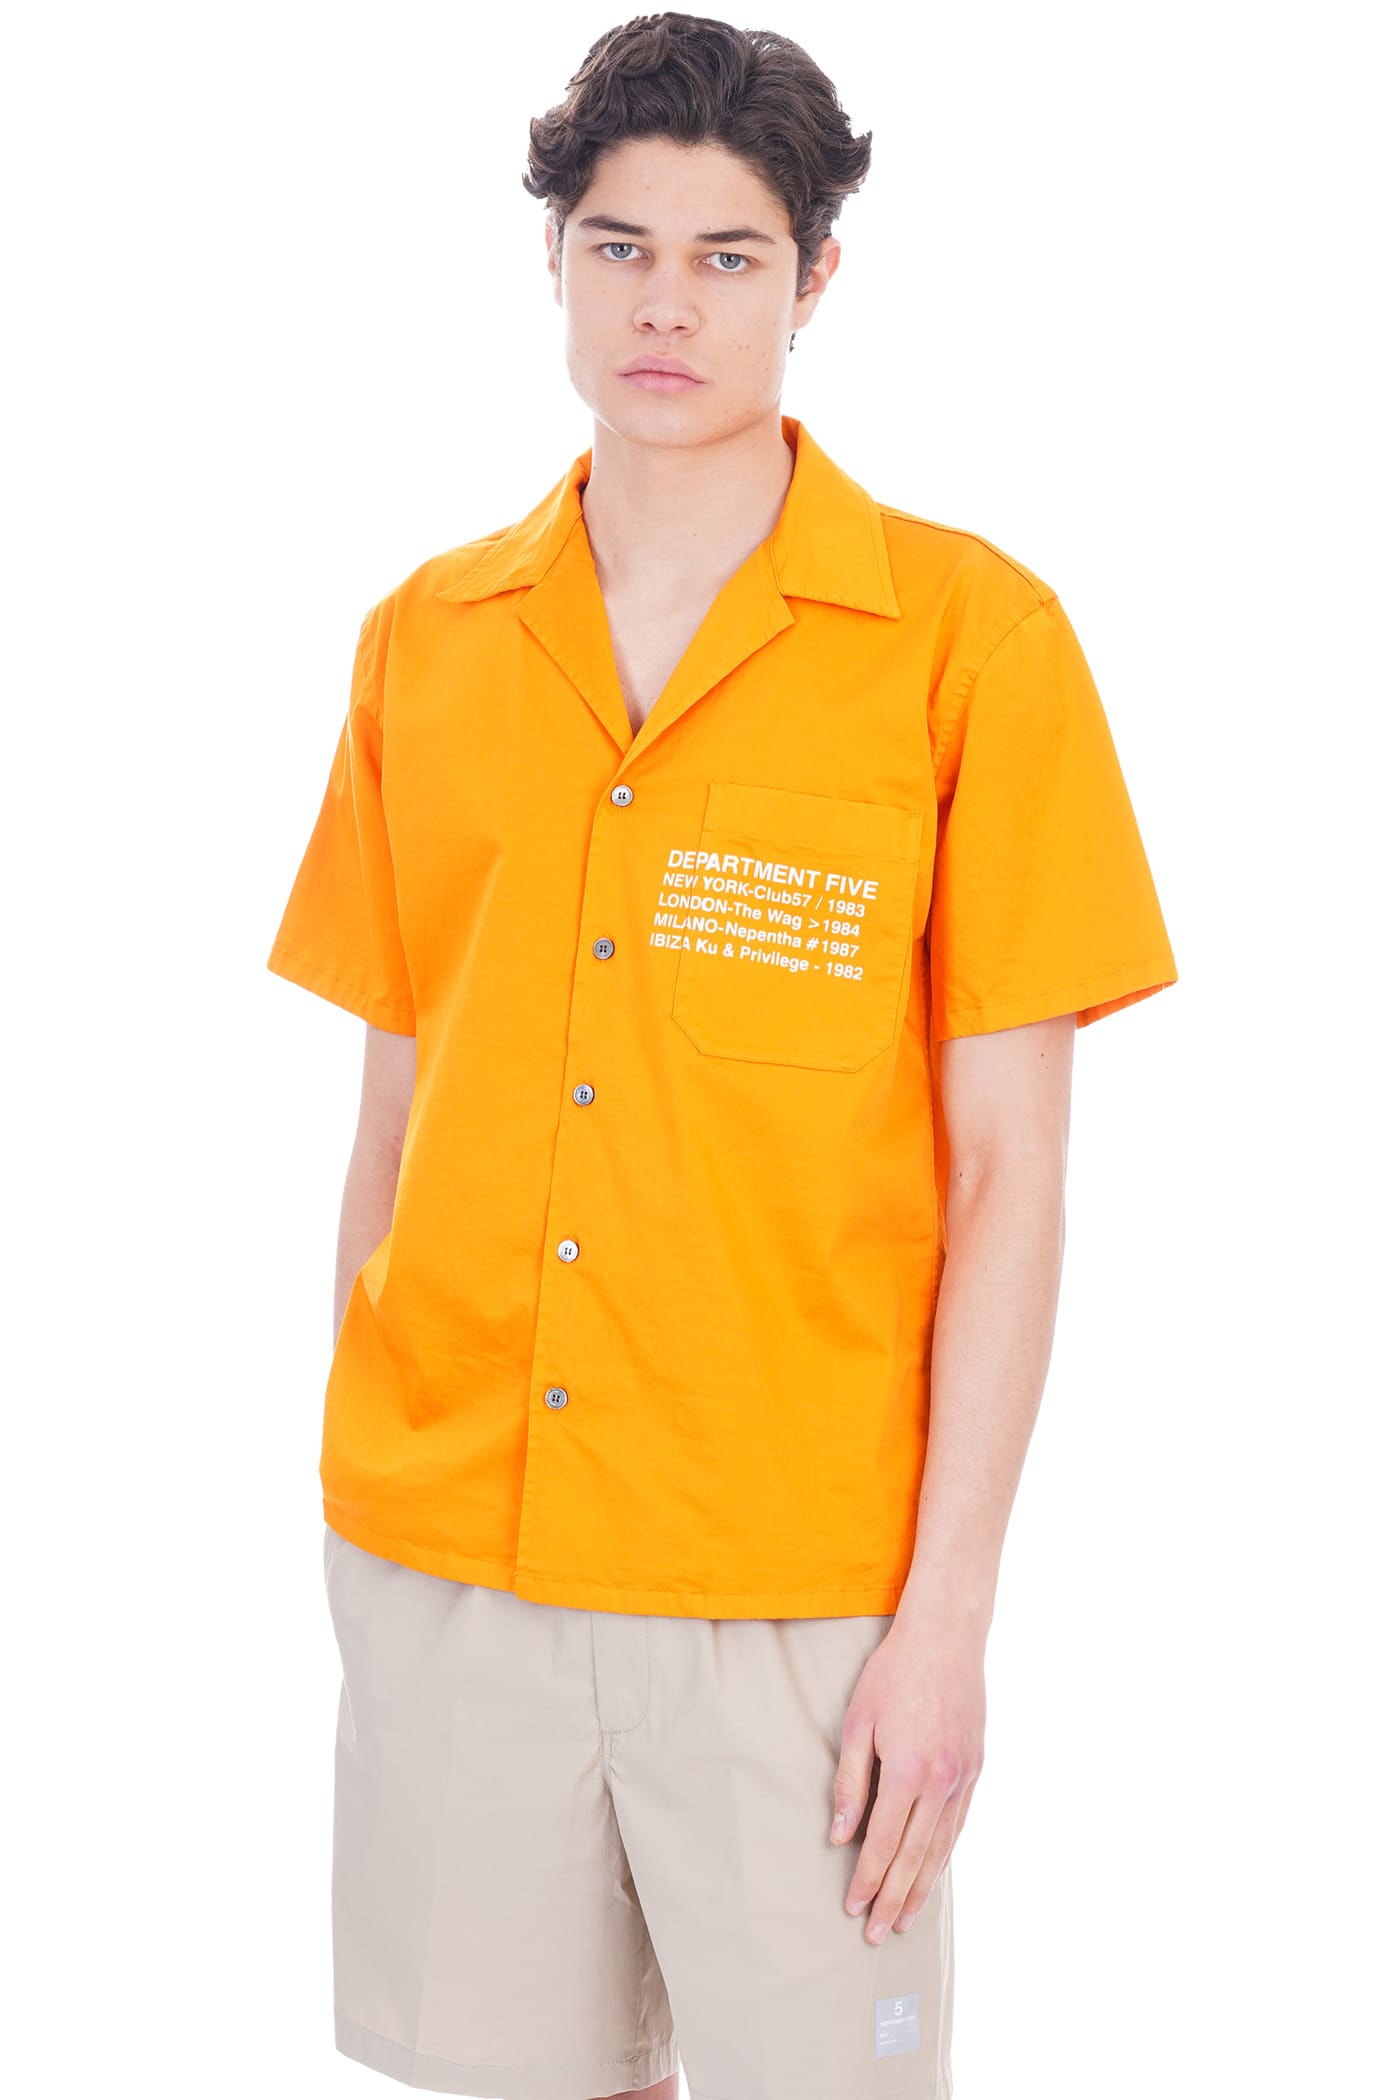 Department Five Digital Shirt In Orange Cotton